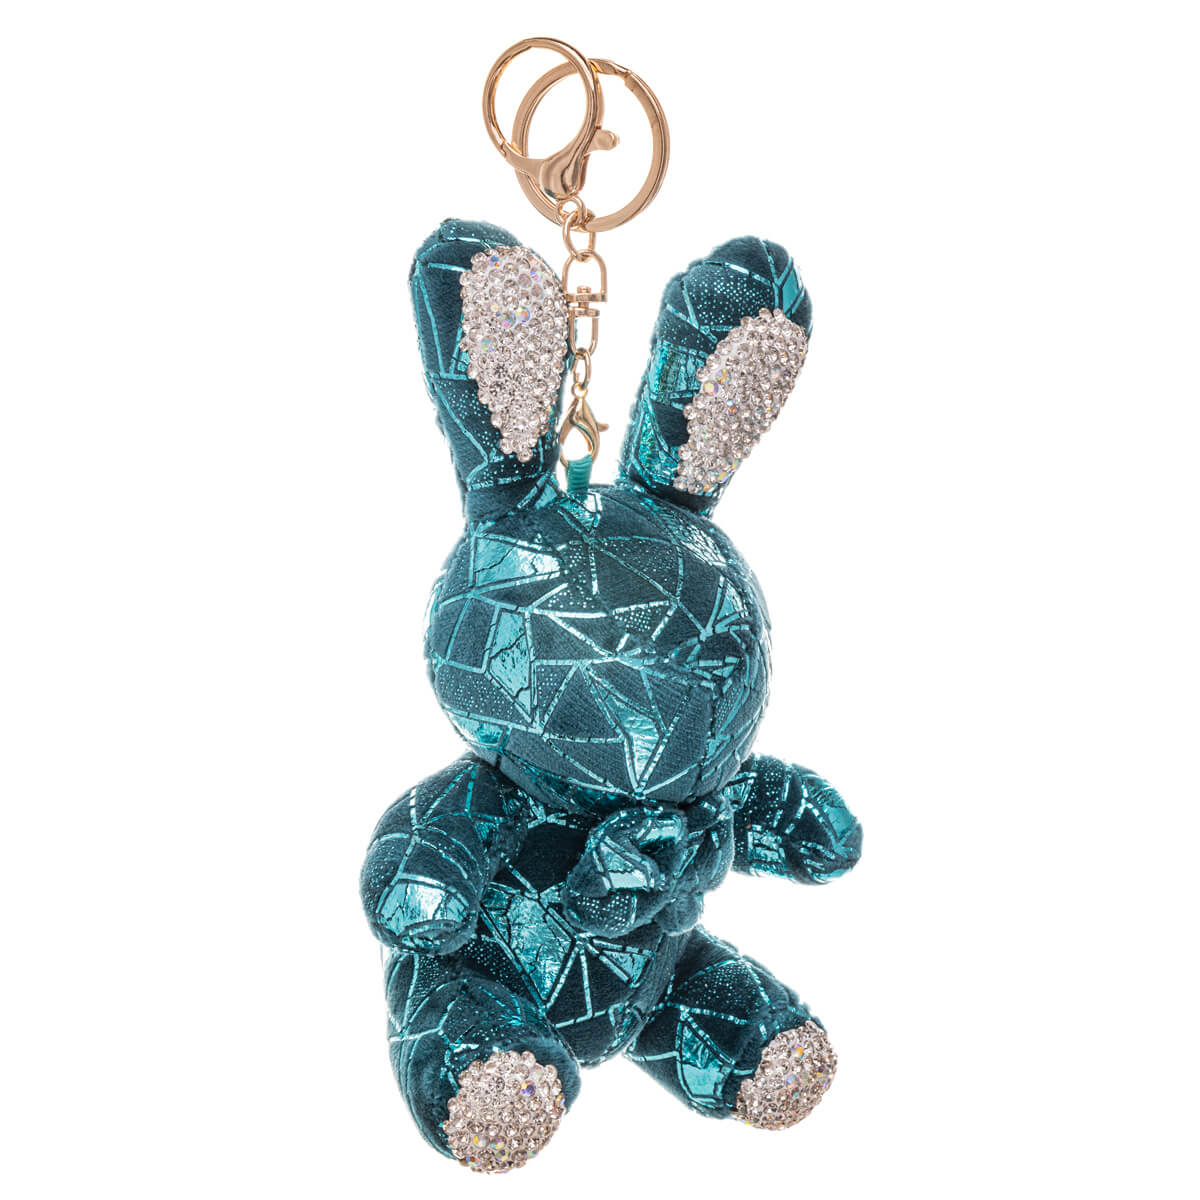 Glittery bunny keyring backpack basket 16cm